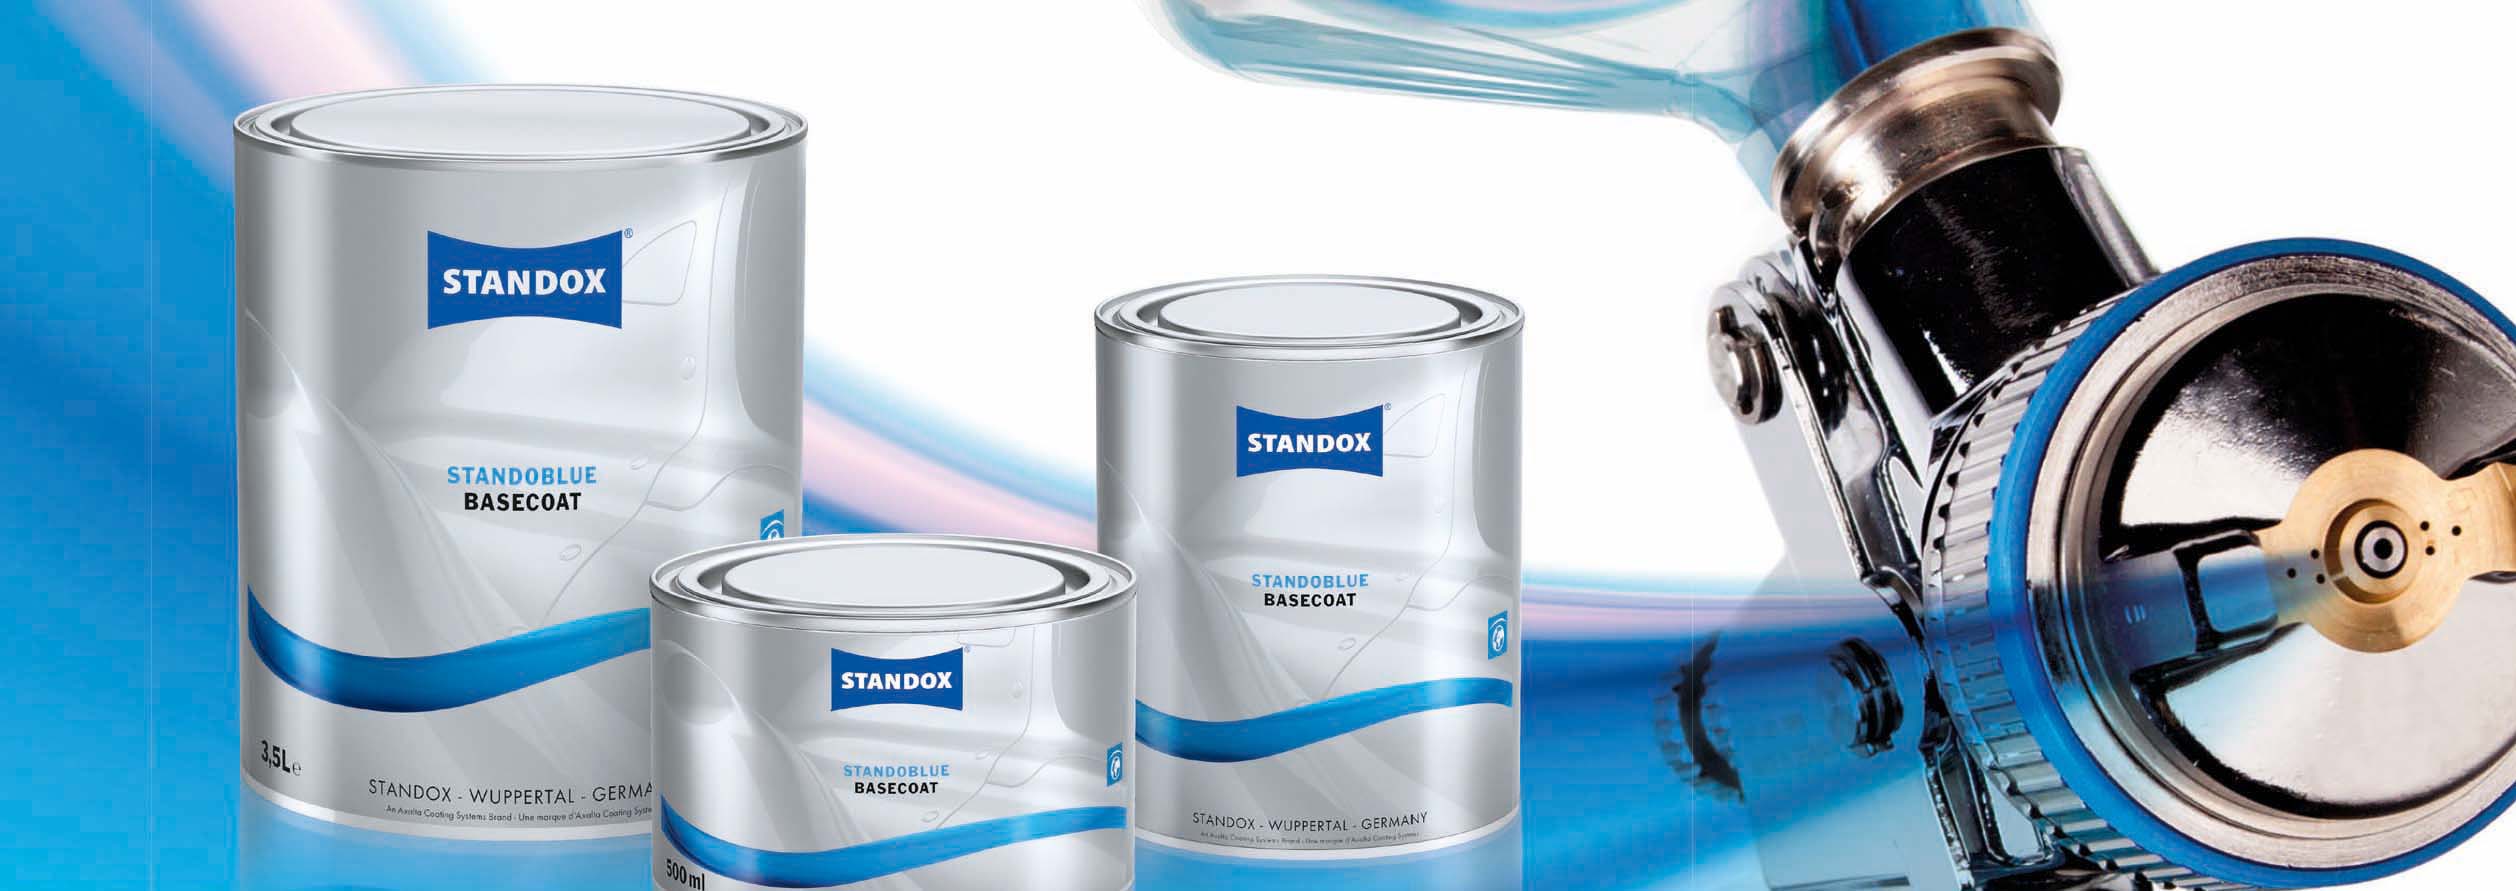 Standox standoblue basecoat tin boxes banner